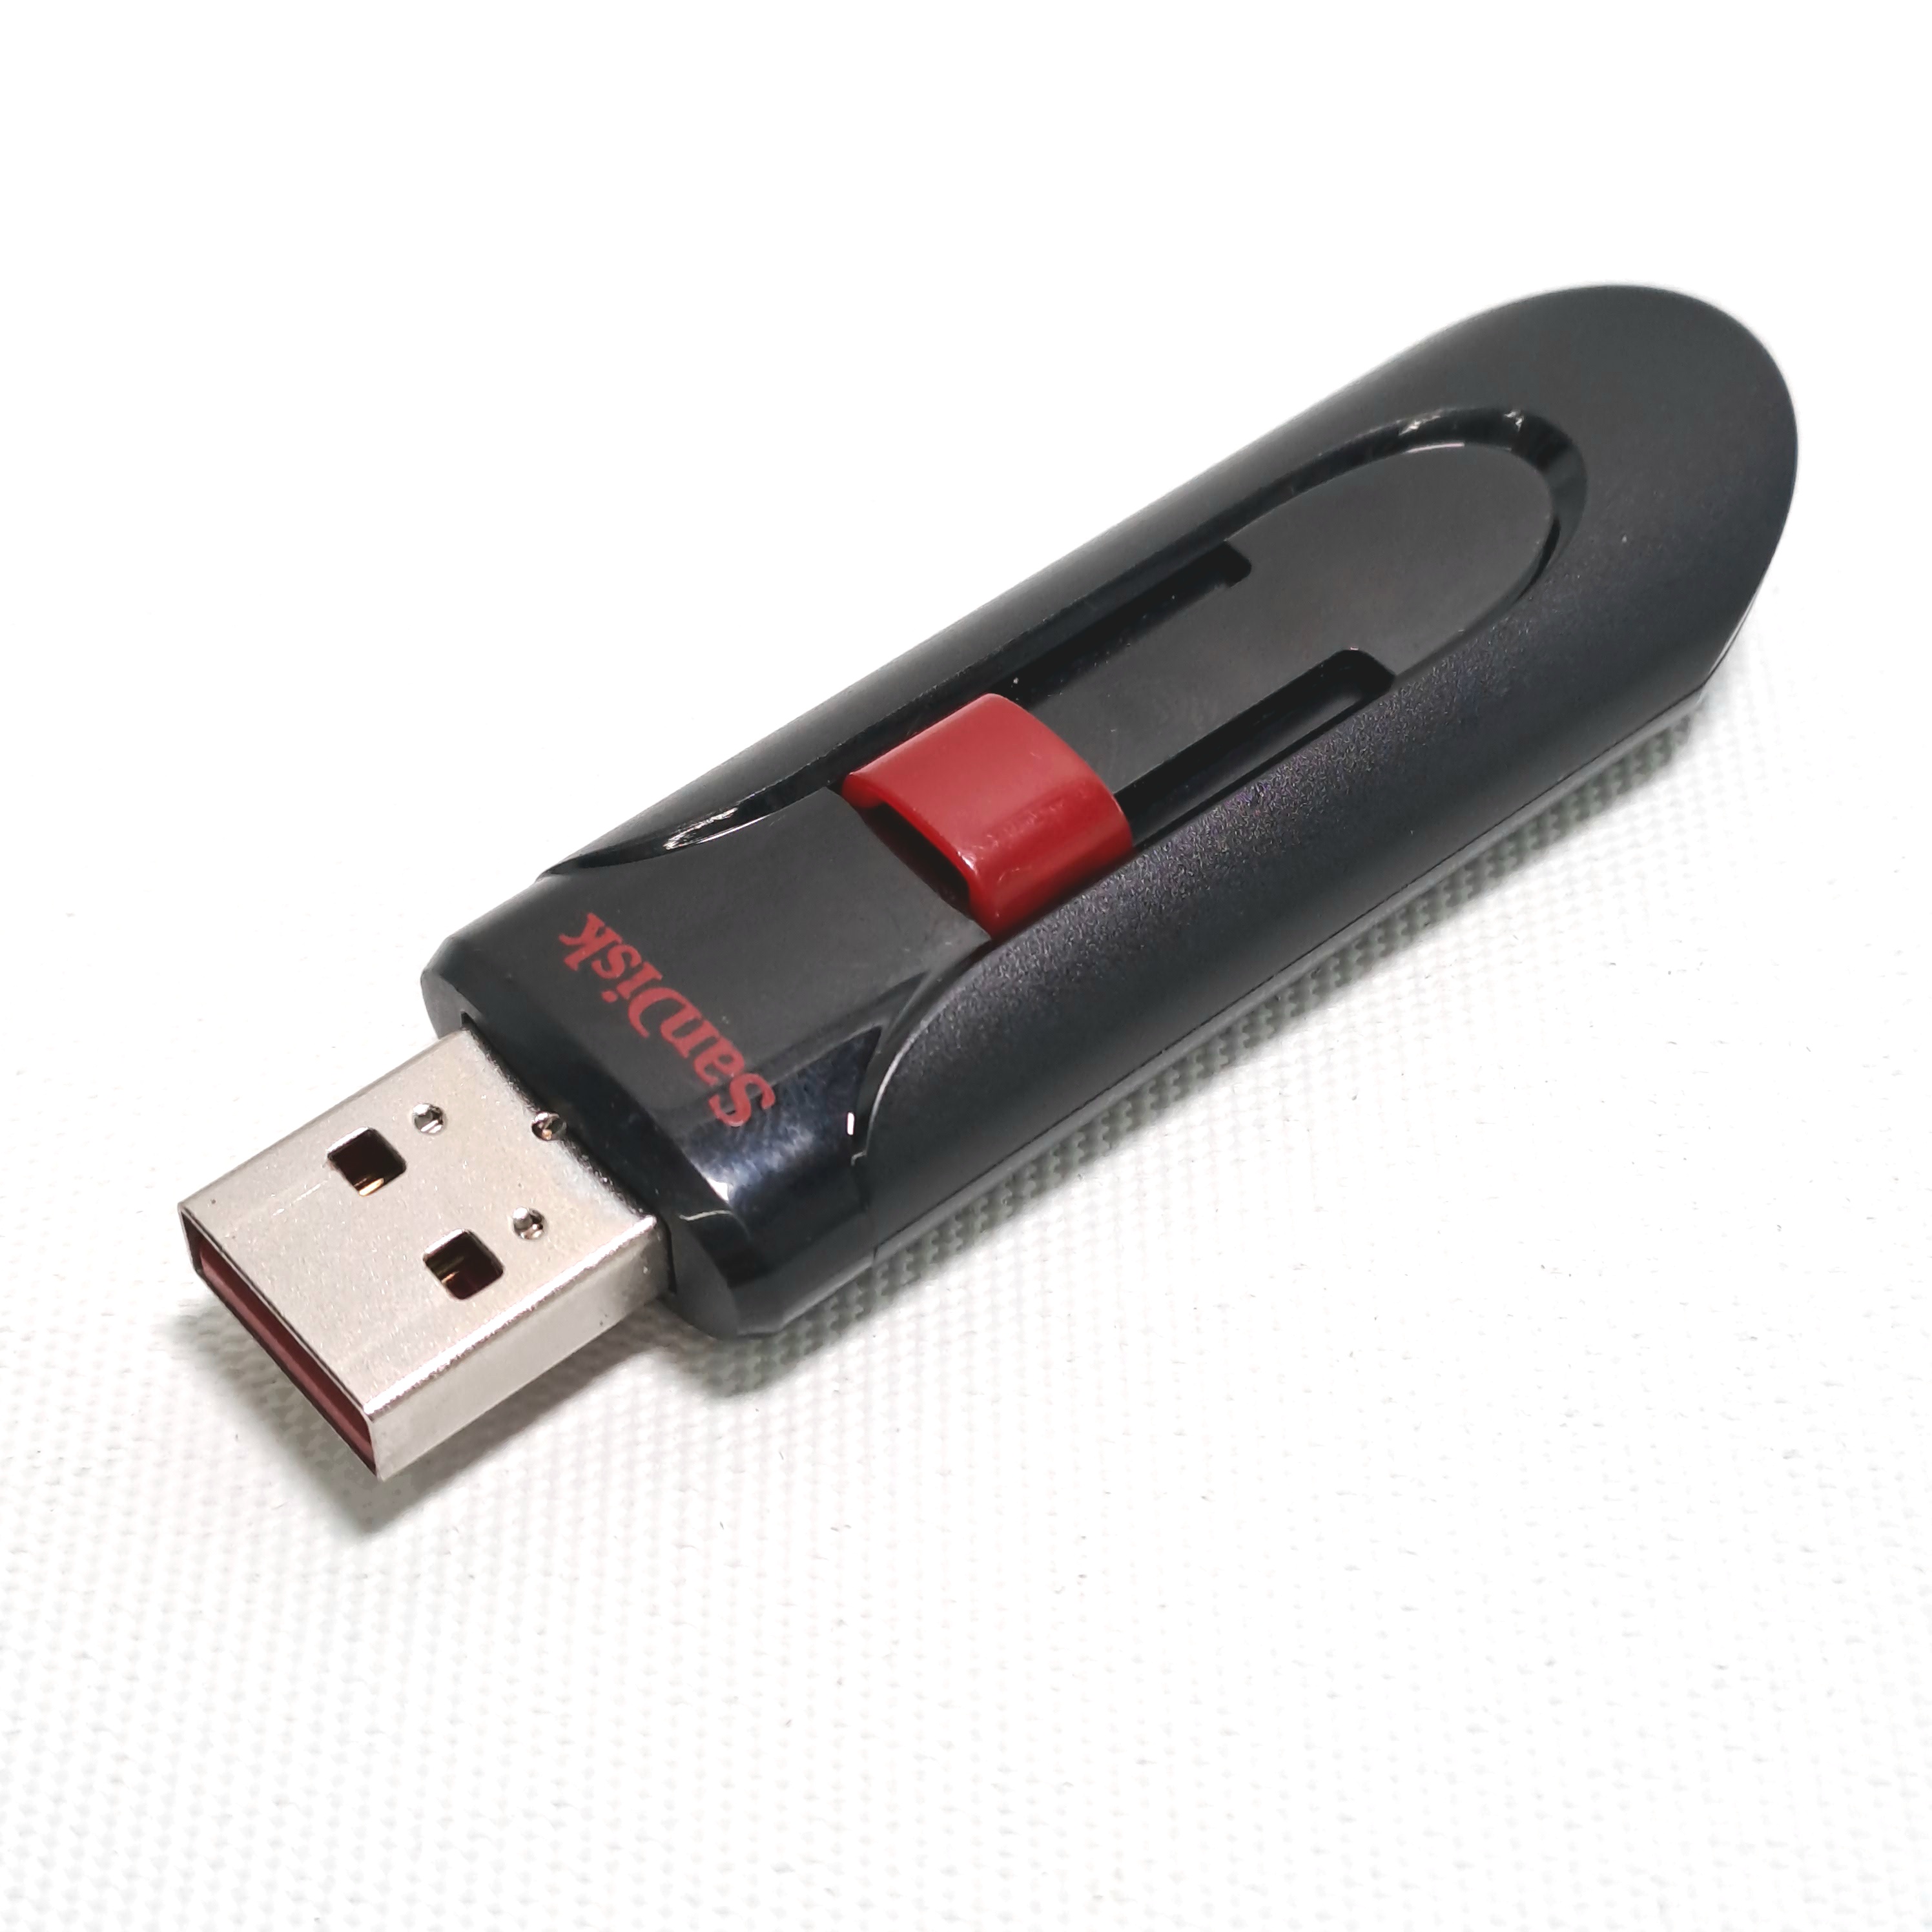 SanDisk Cruzer Glide 3.0 USB Flash Drive, CZ600 256GB